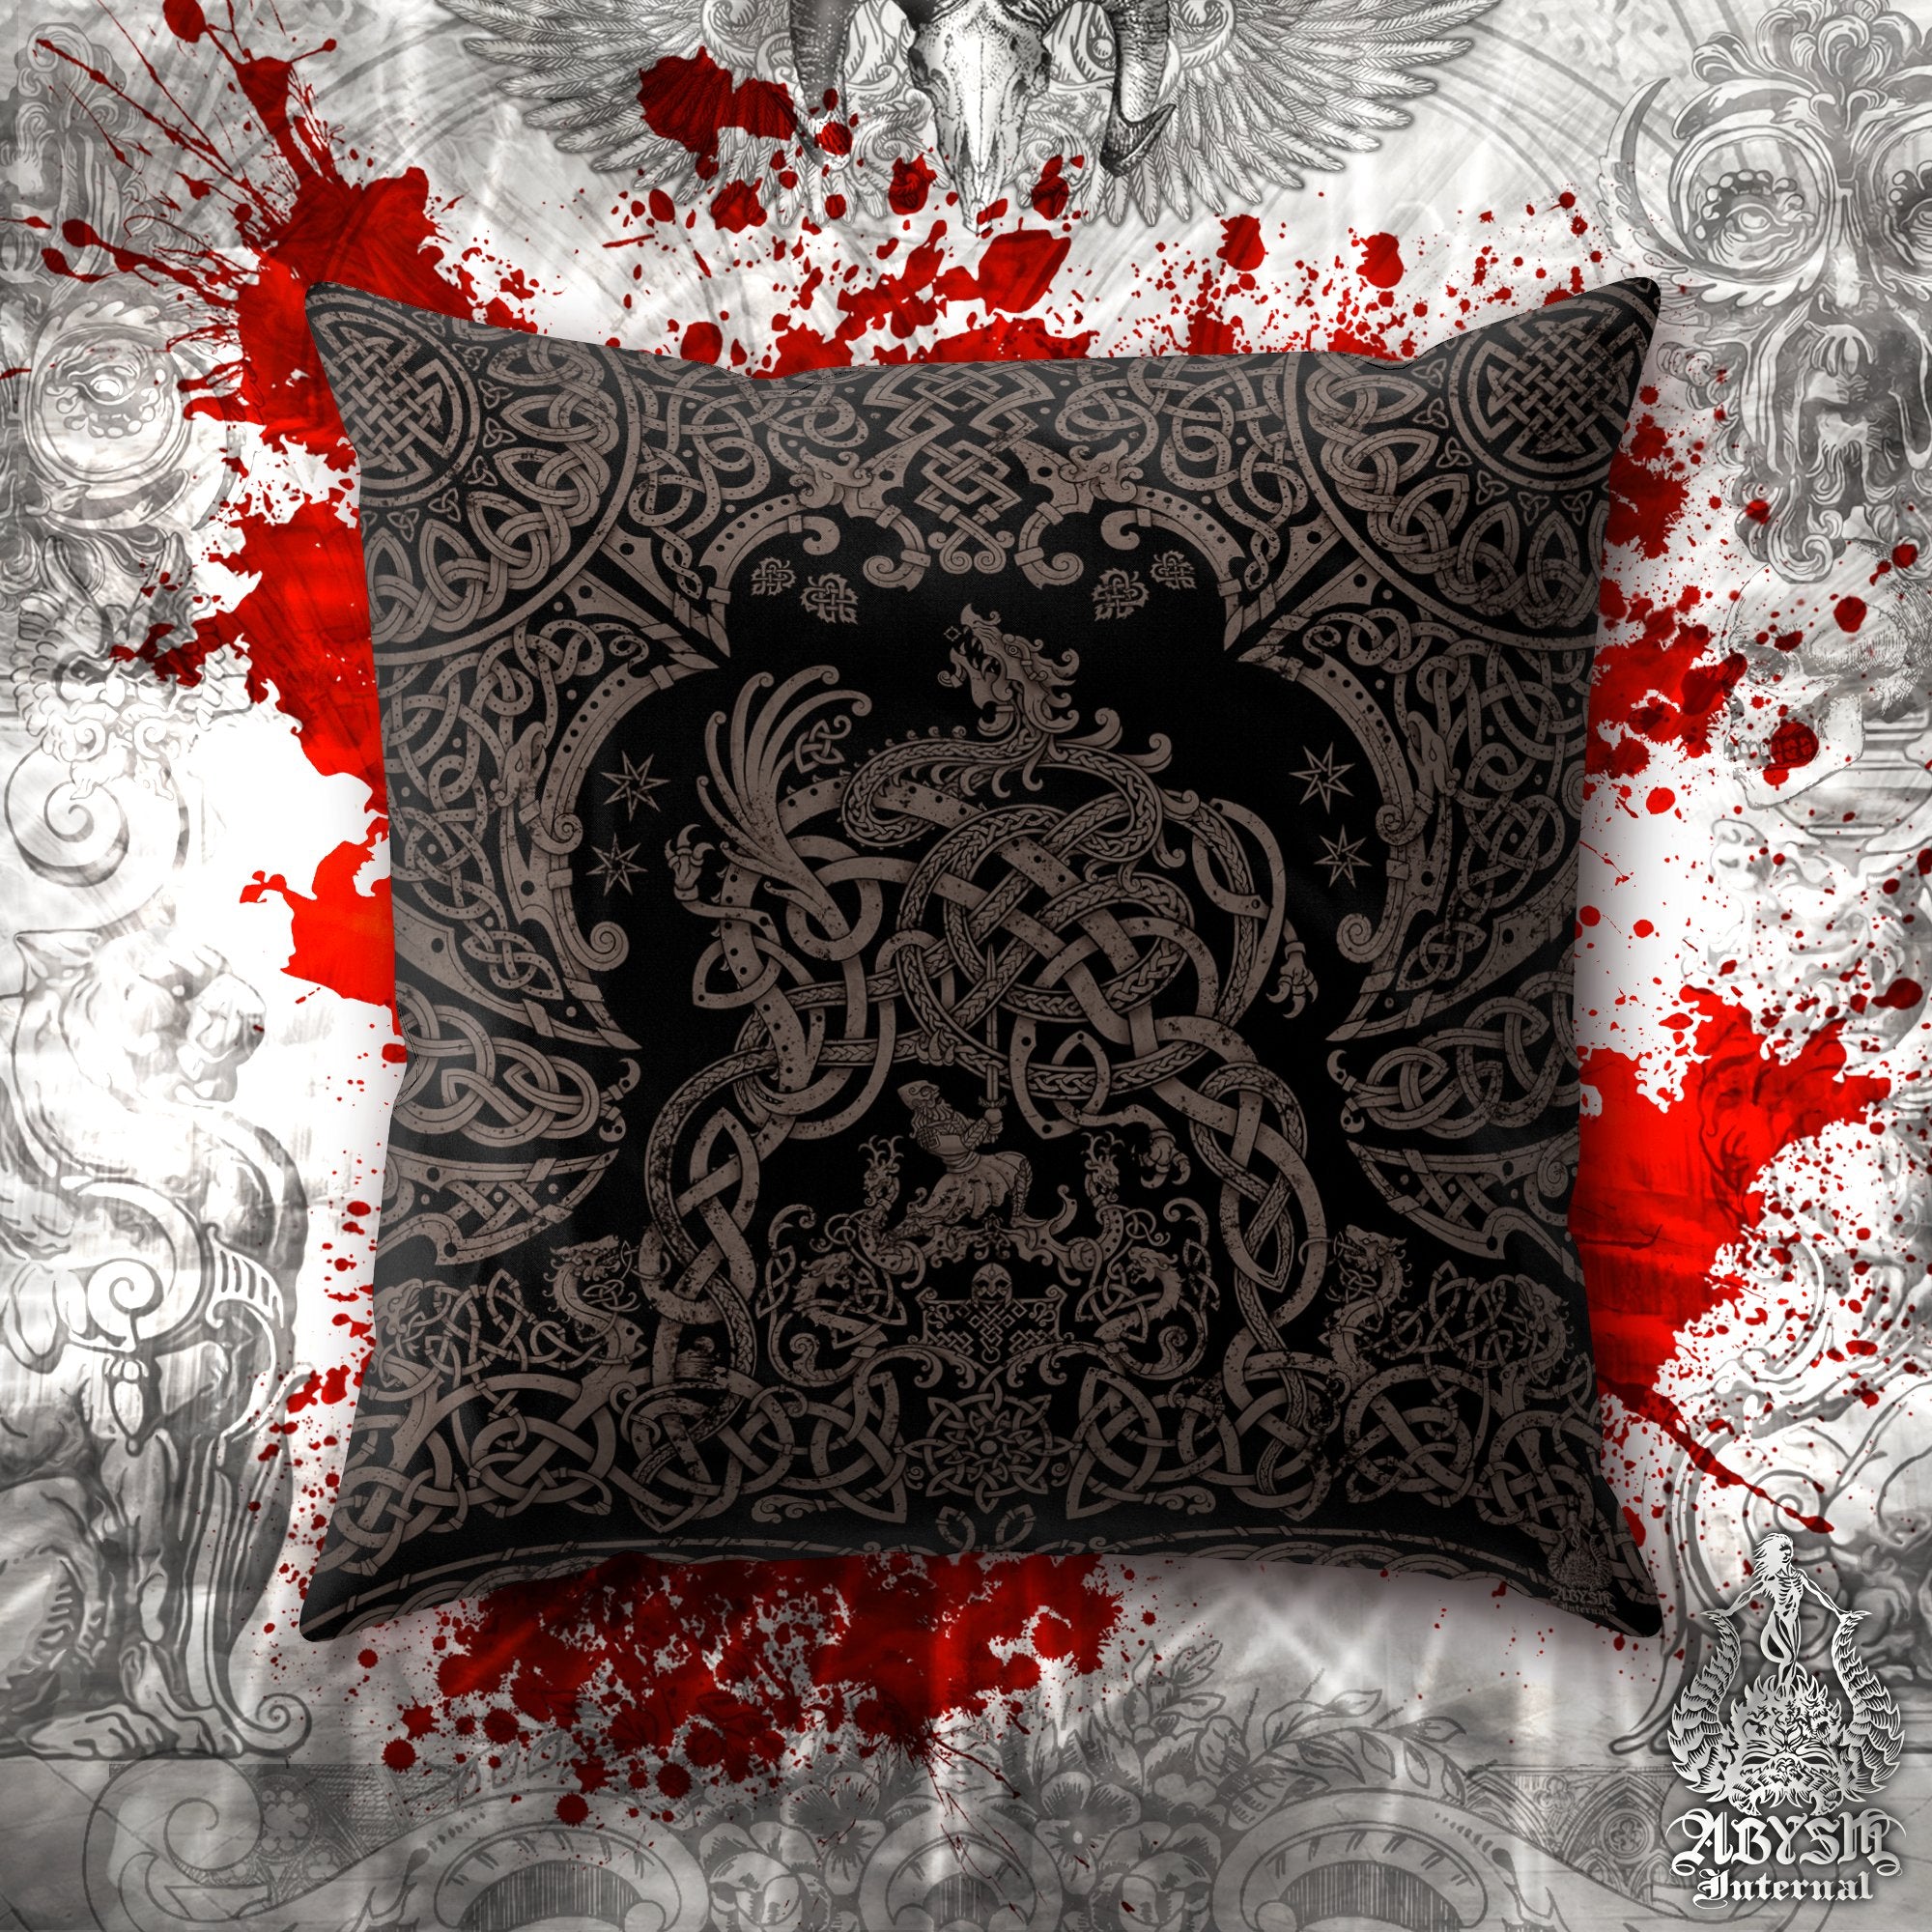 Norse Throw Pillow, Decorative Accent Pillow, Square Cushion Cover, Viking Room Decor, Dragon Fafnir, Alternative Home - Black Grey Grit - Abysm Internal